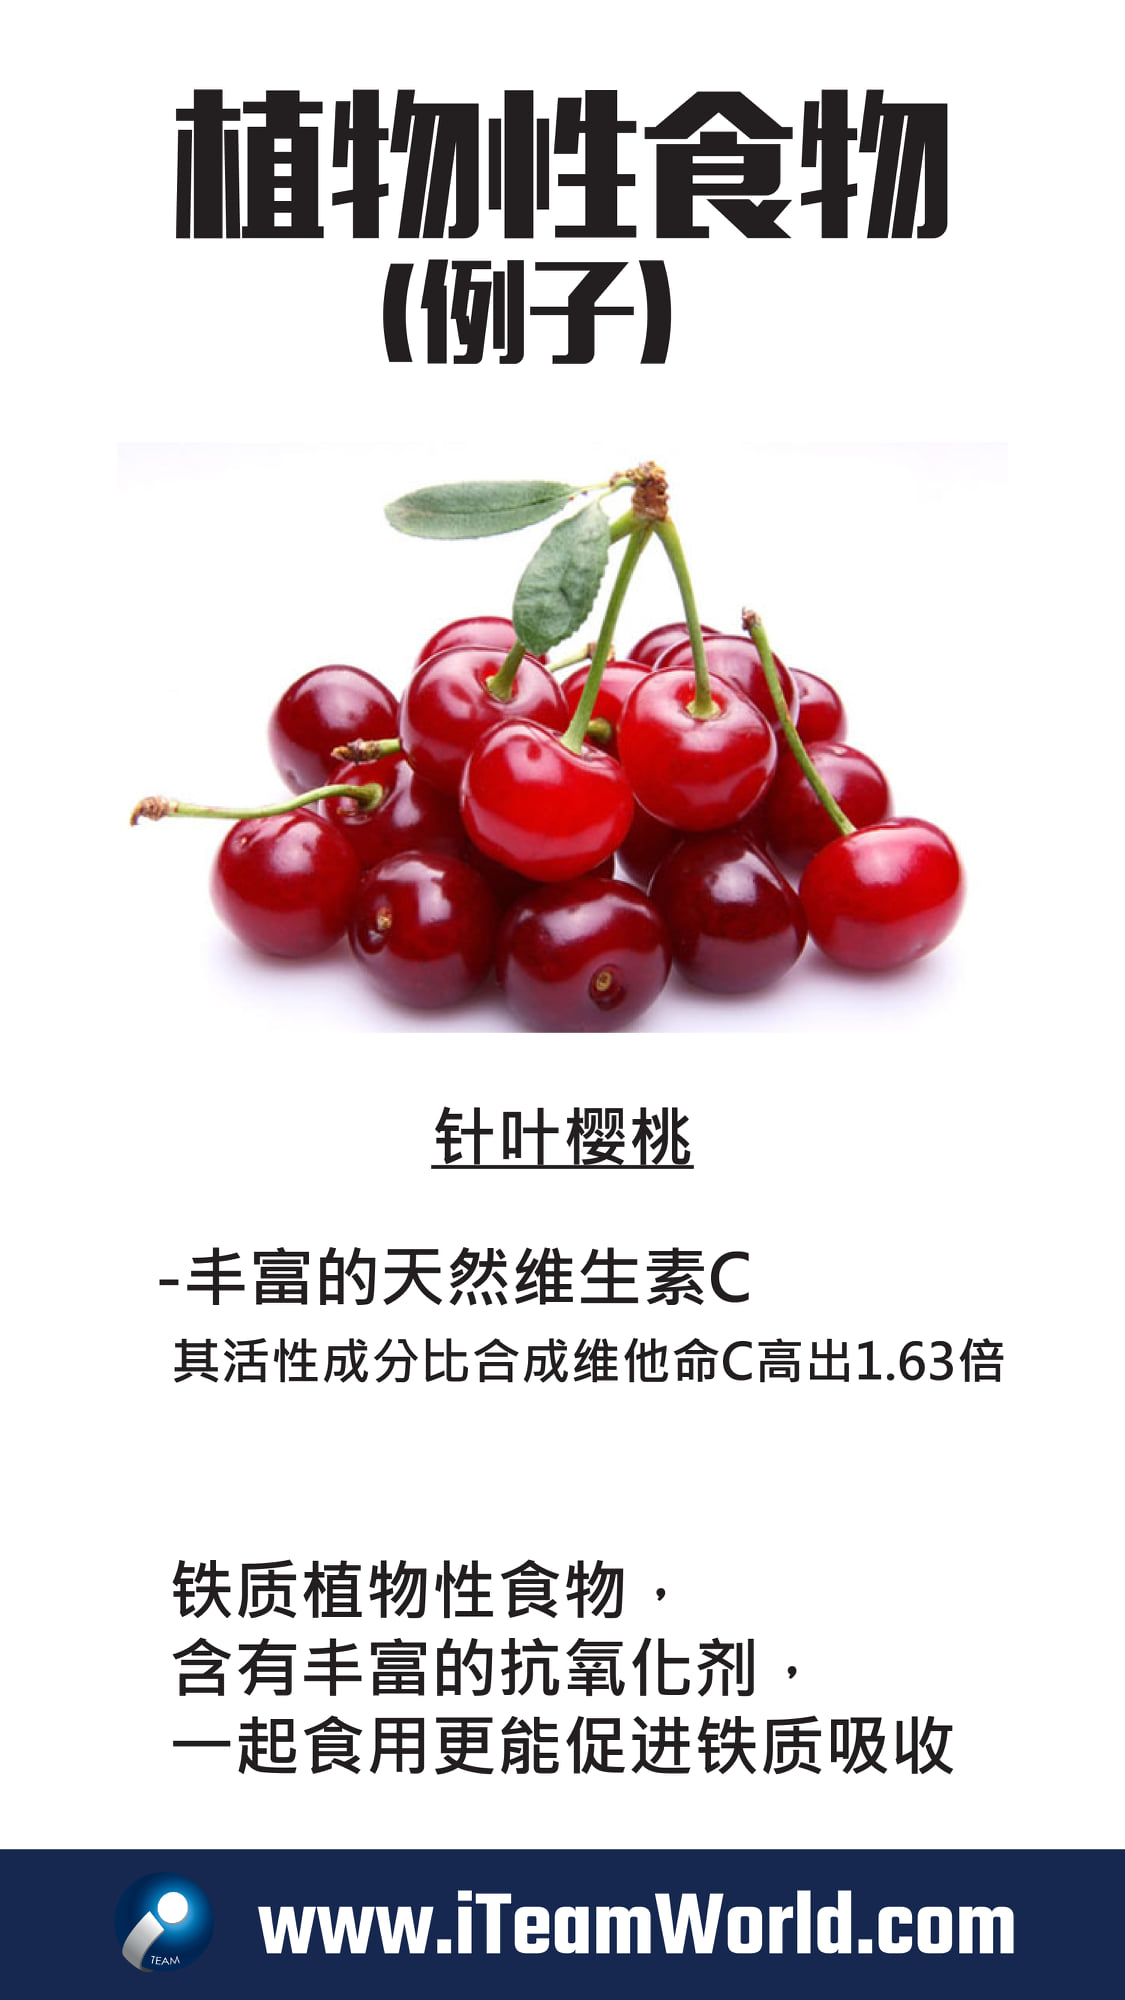 Cherry, plant food